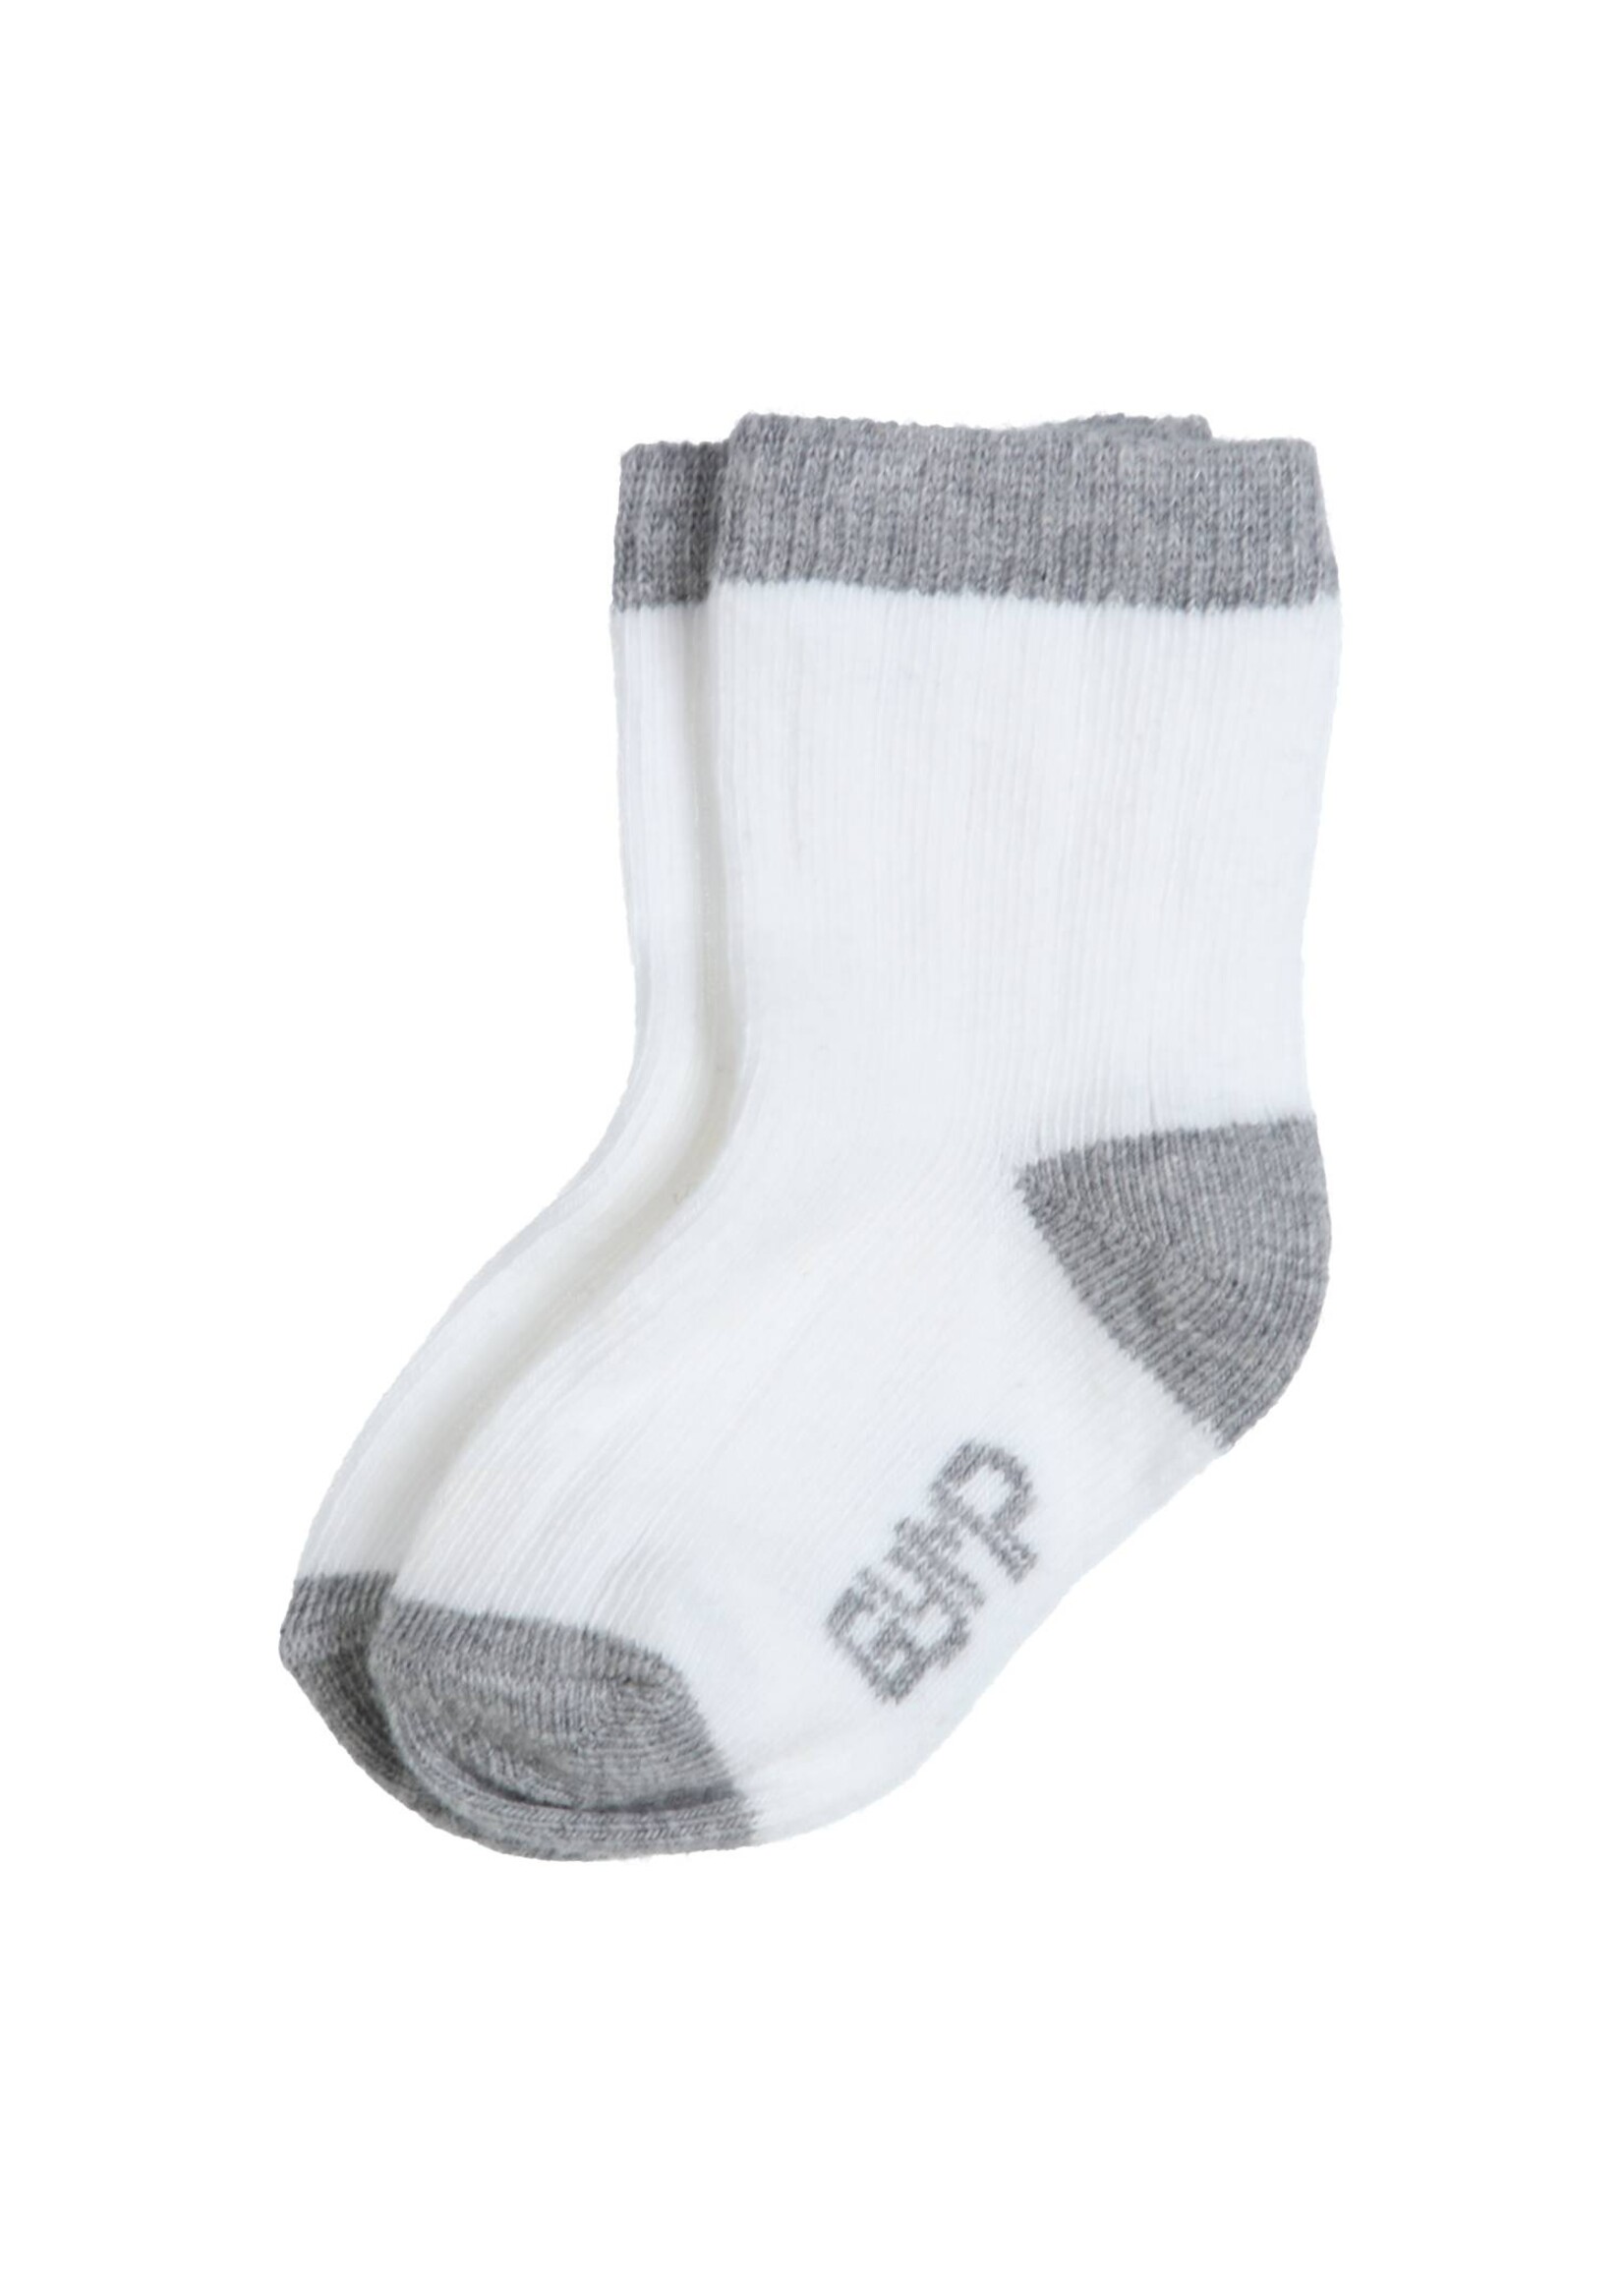 Gymp Boys Socks Kite 05-4082-20 White - Grey